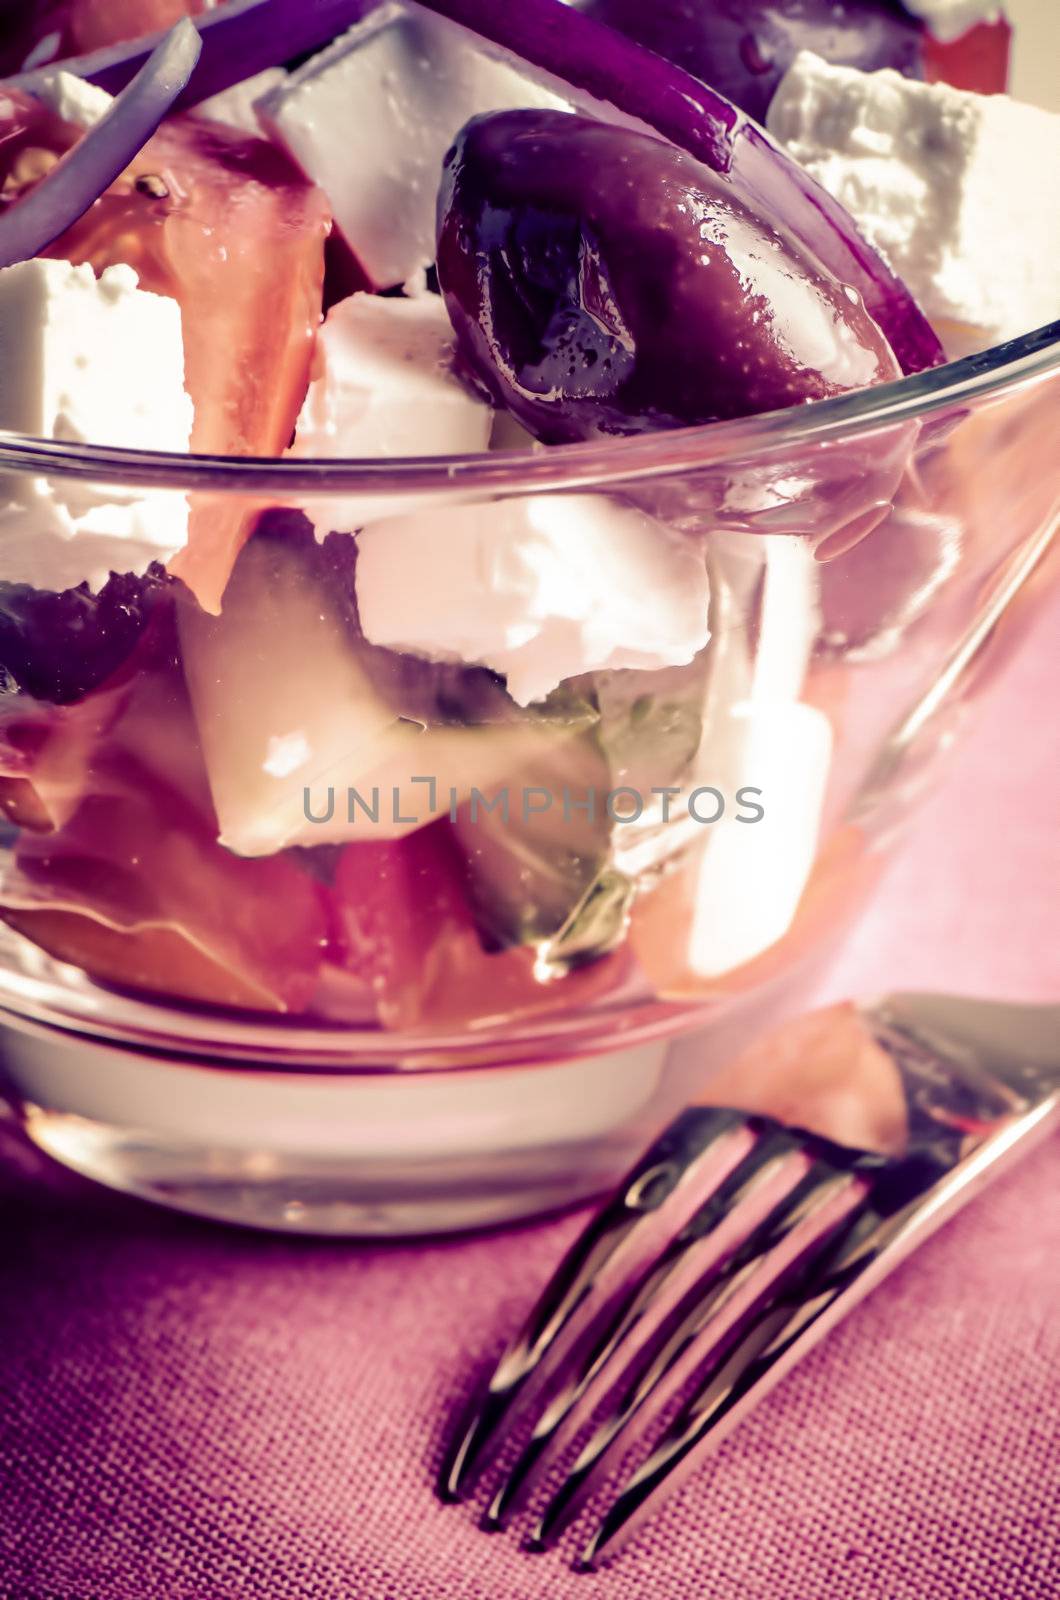 Greek salad in glass dish on napkin.